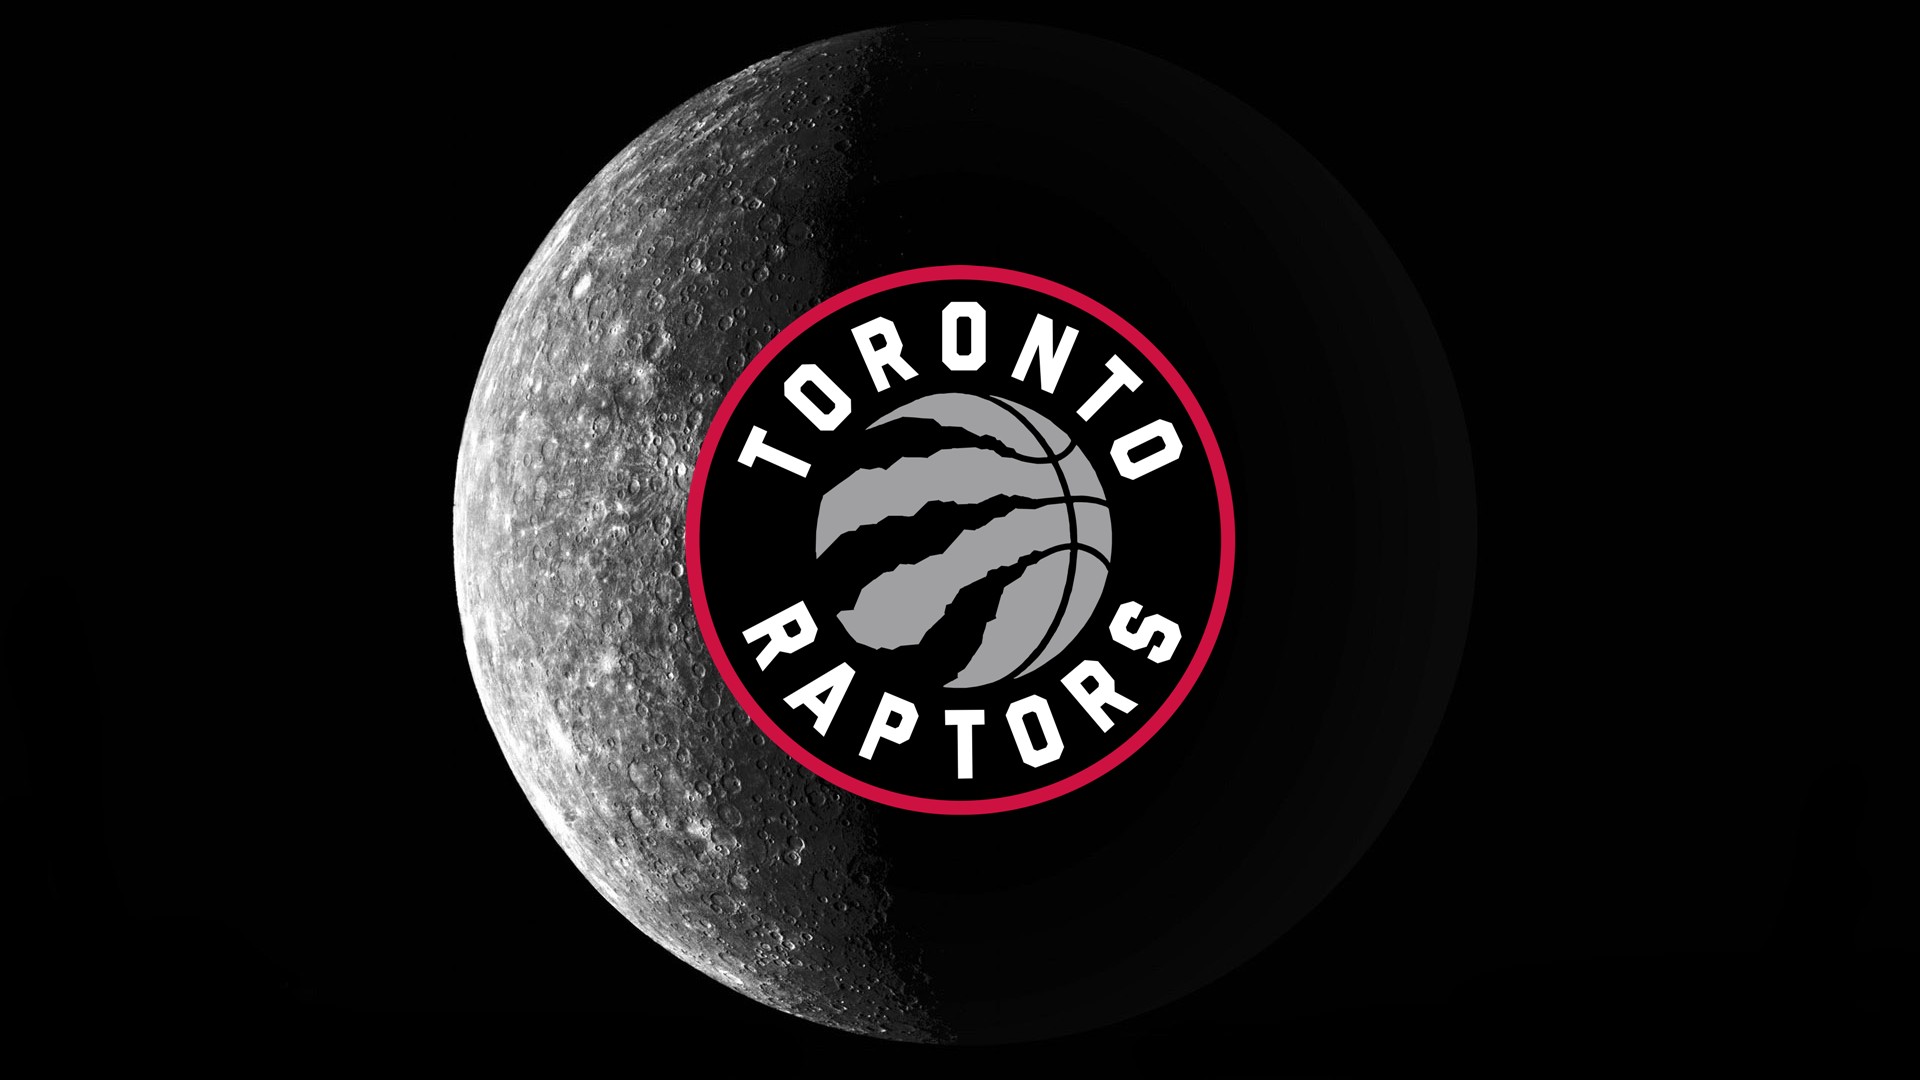  Toronto Raptors HQ Background Wallpapers